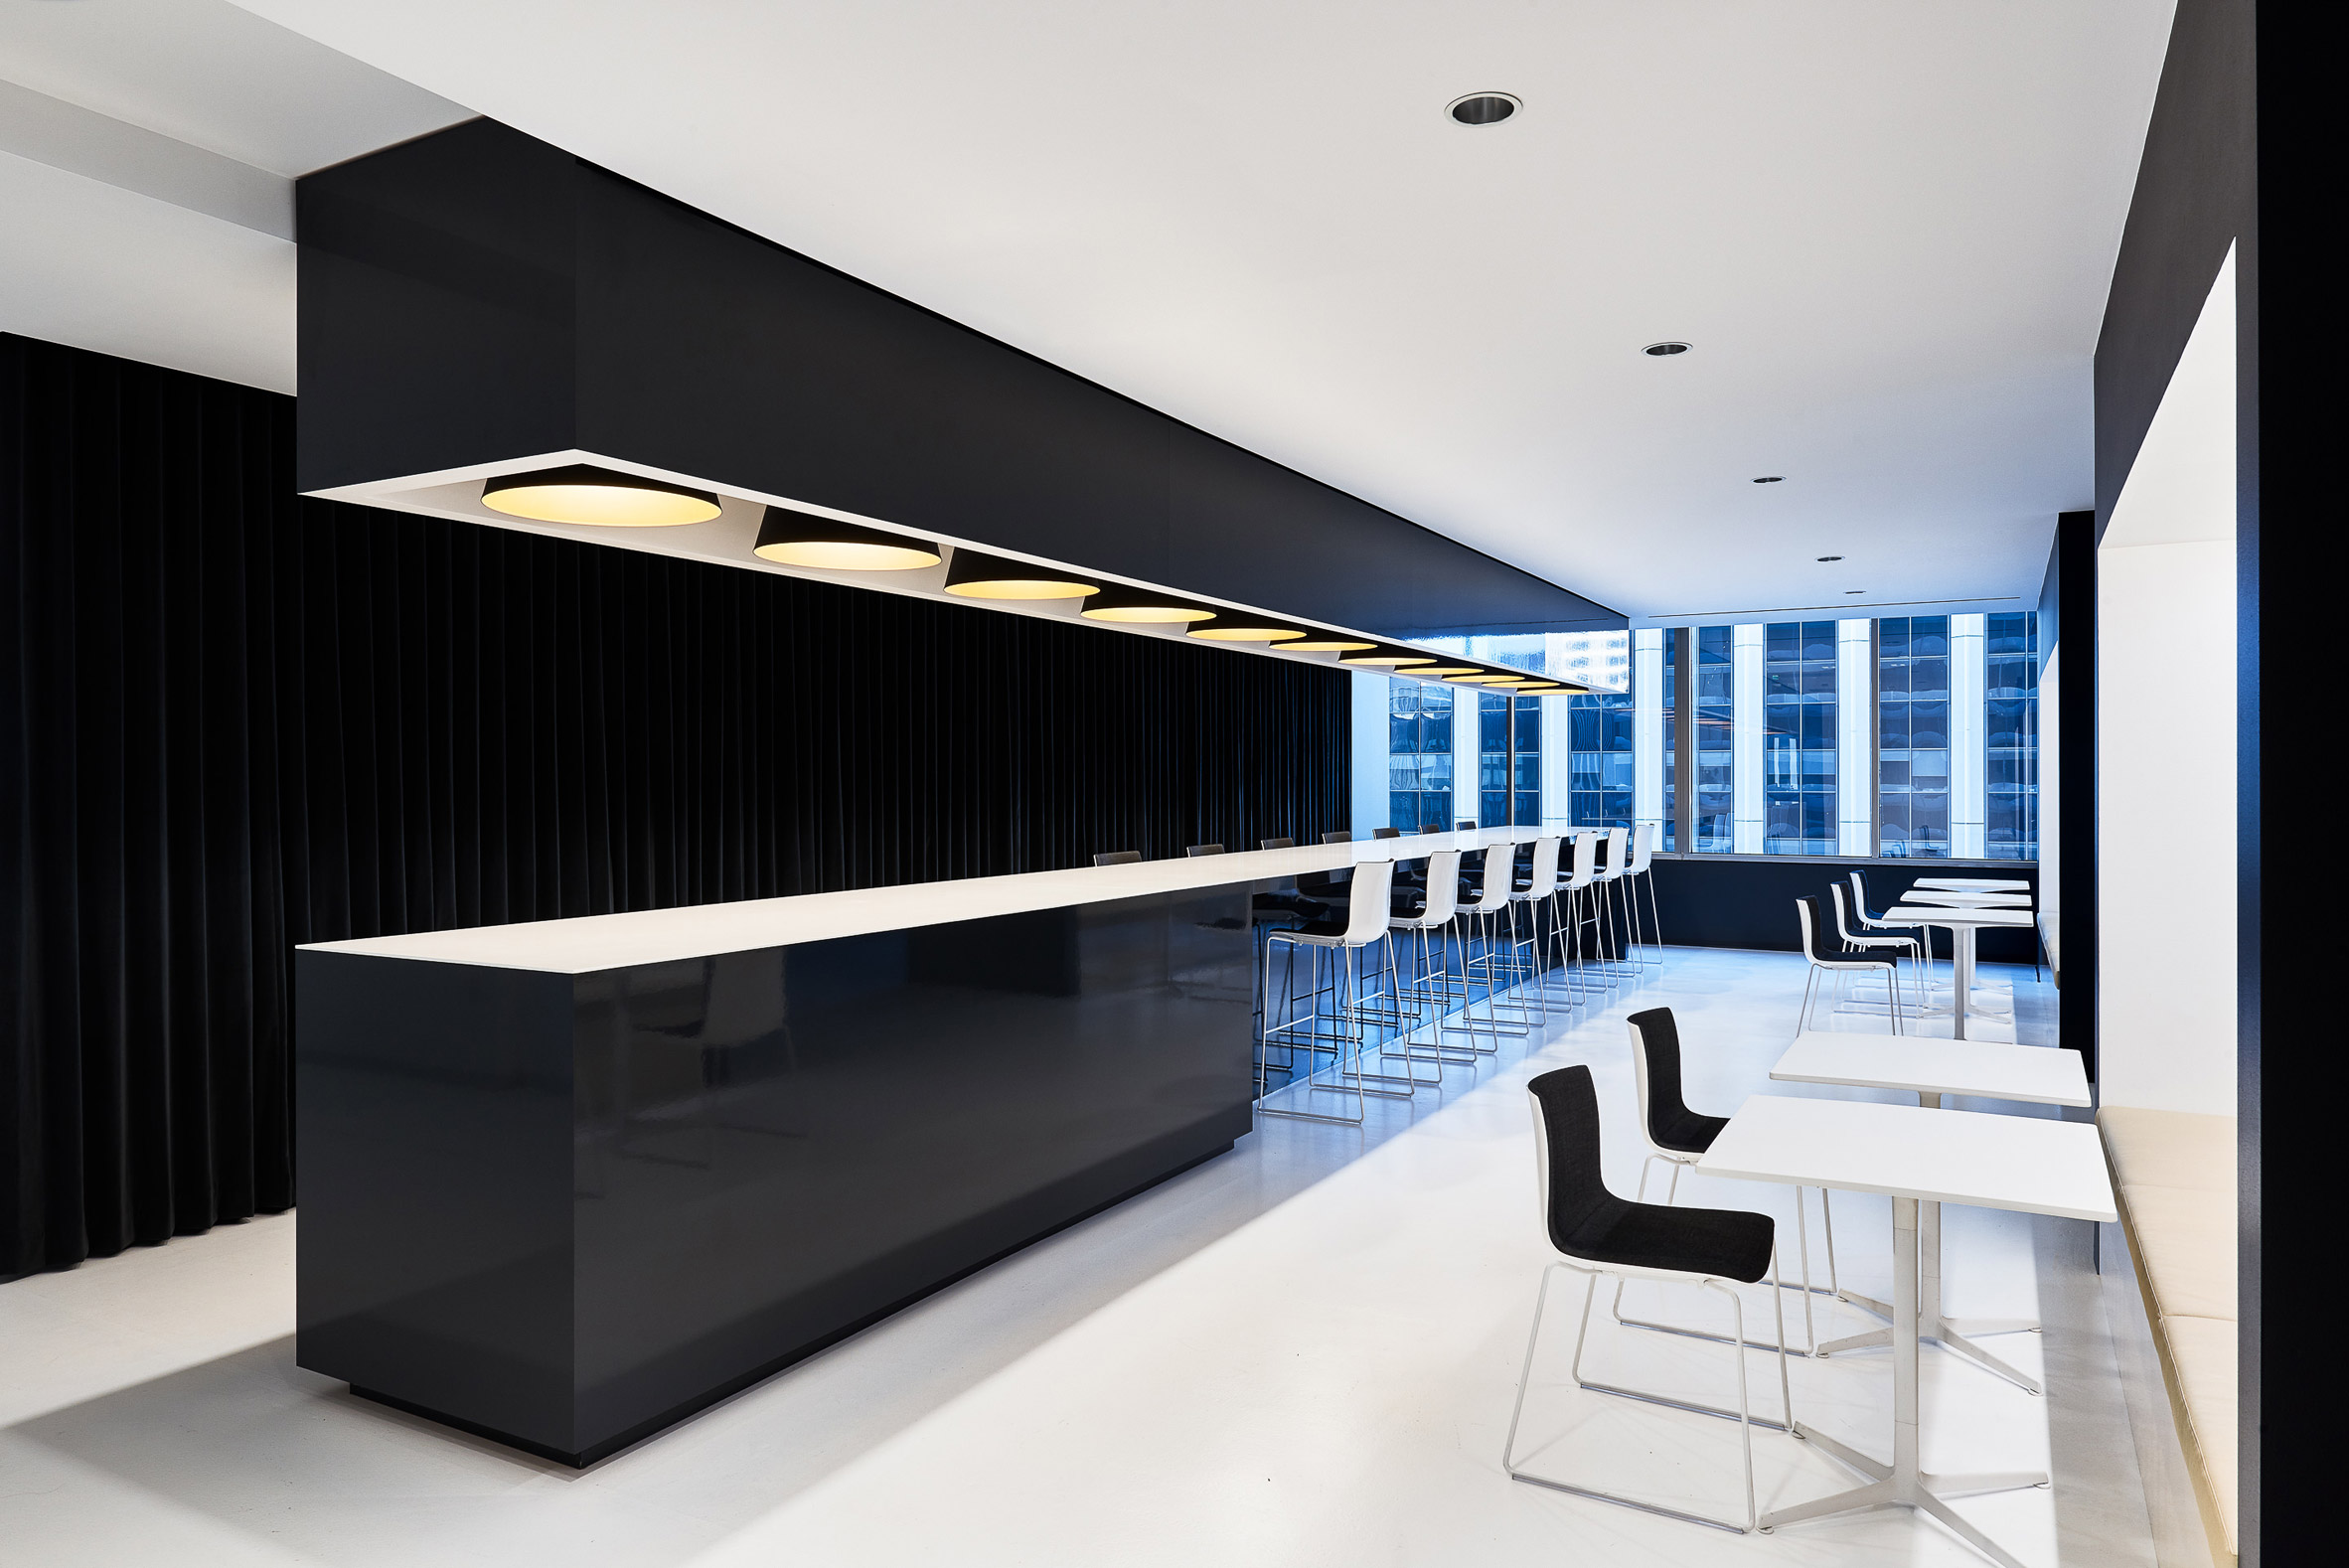 Garcia Tamjidi designs minimal office interior for San Francisco cosmetics company